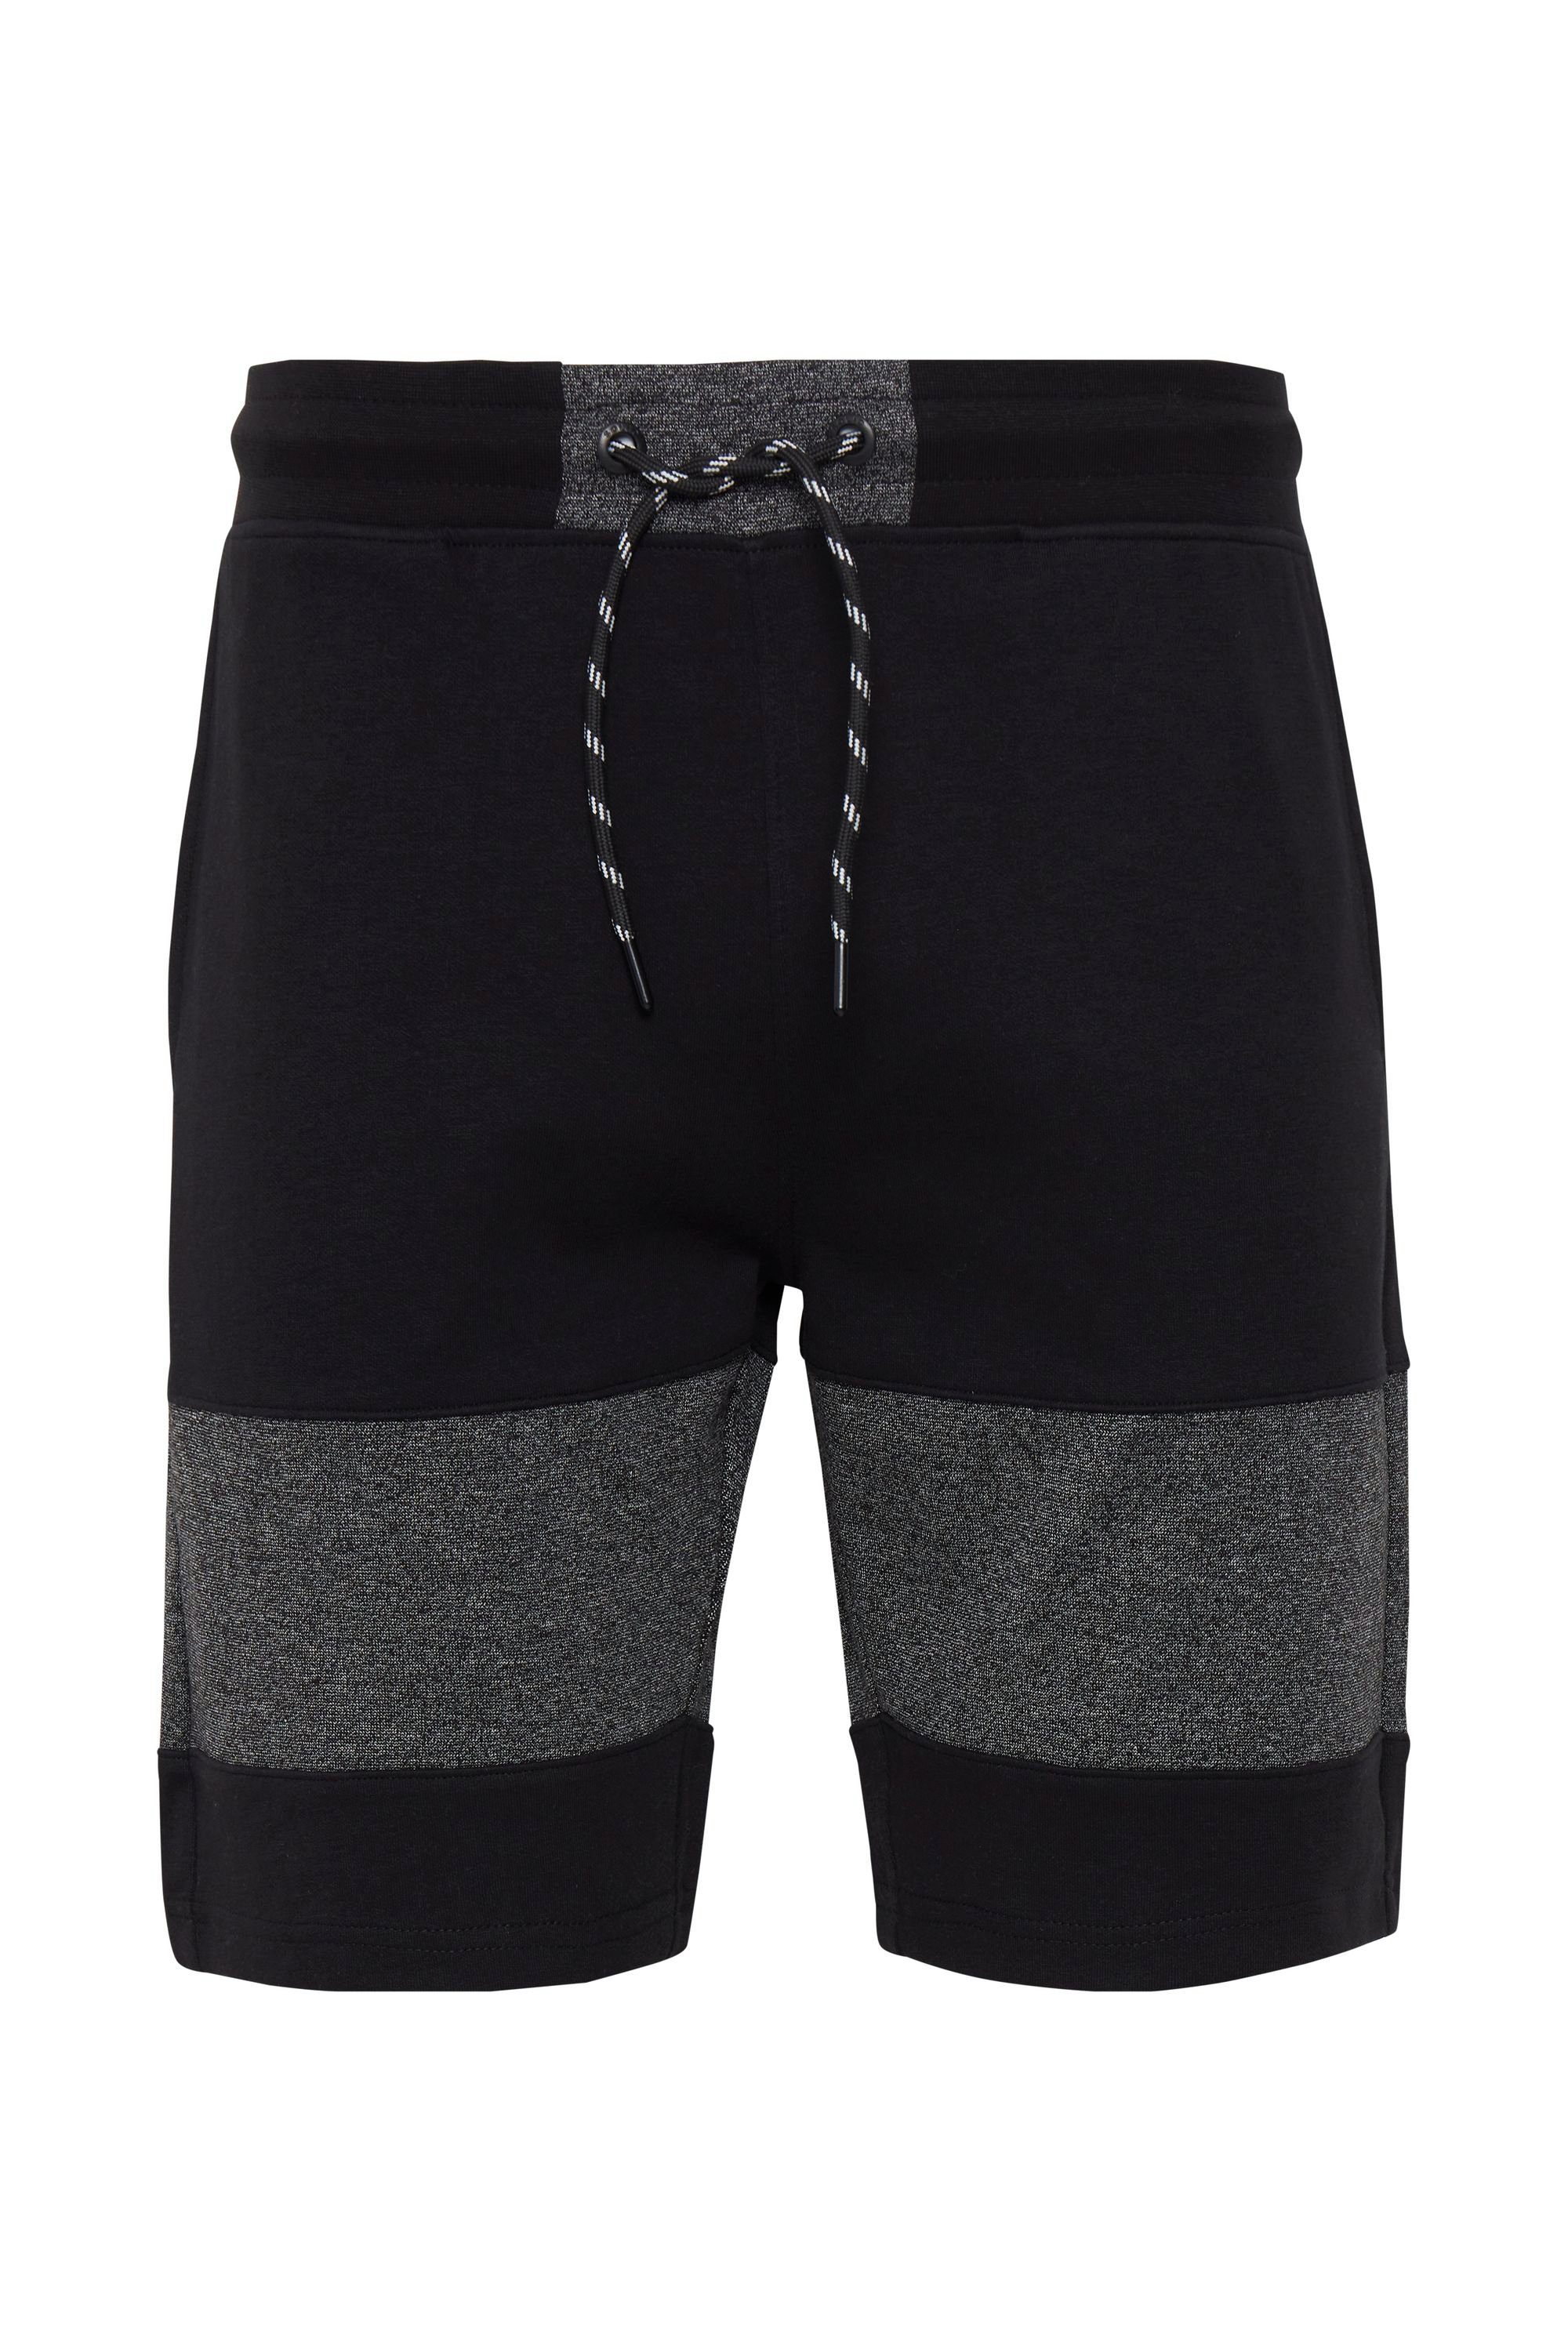 !Solid Sweat Black Sweatshorts Shorts (194007) SDMekir Colorblock